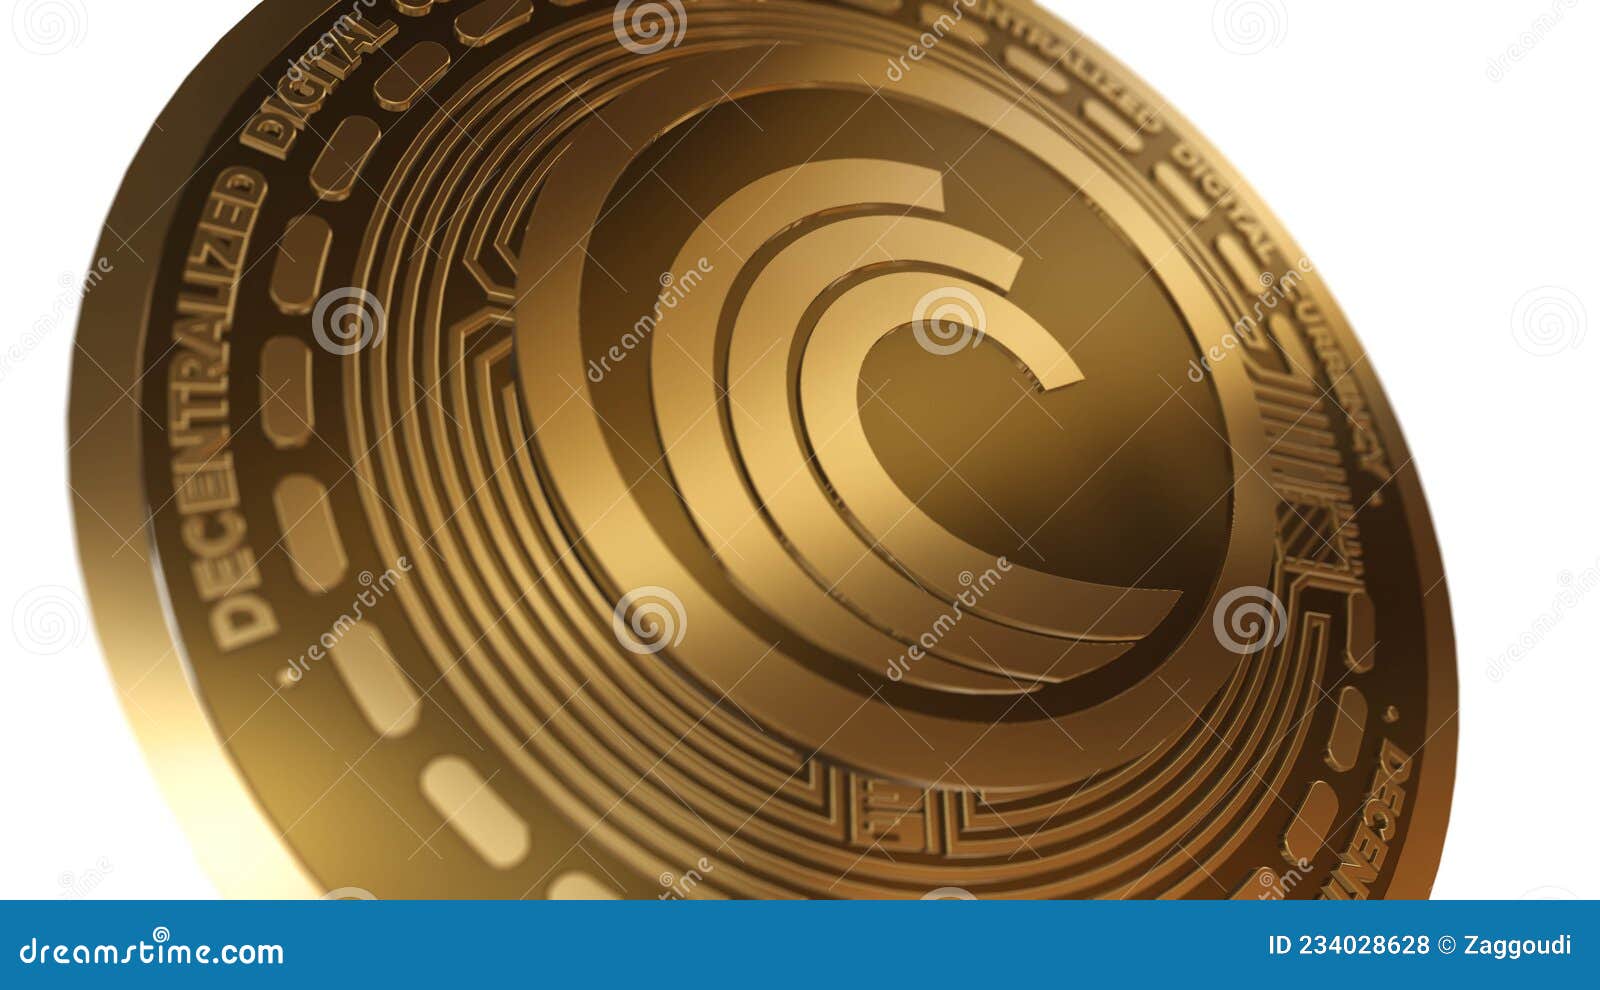 3d render golden bittorrent btt cryptocurrency close up view